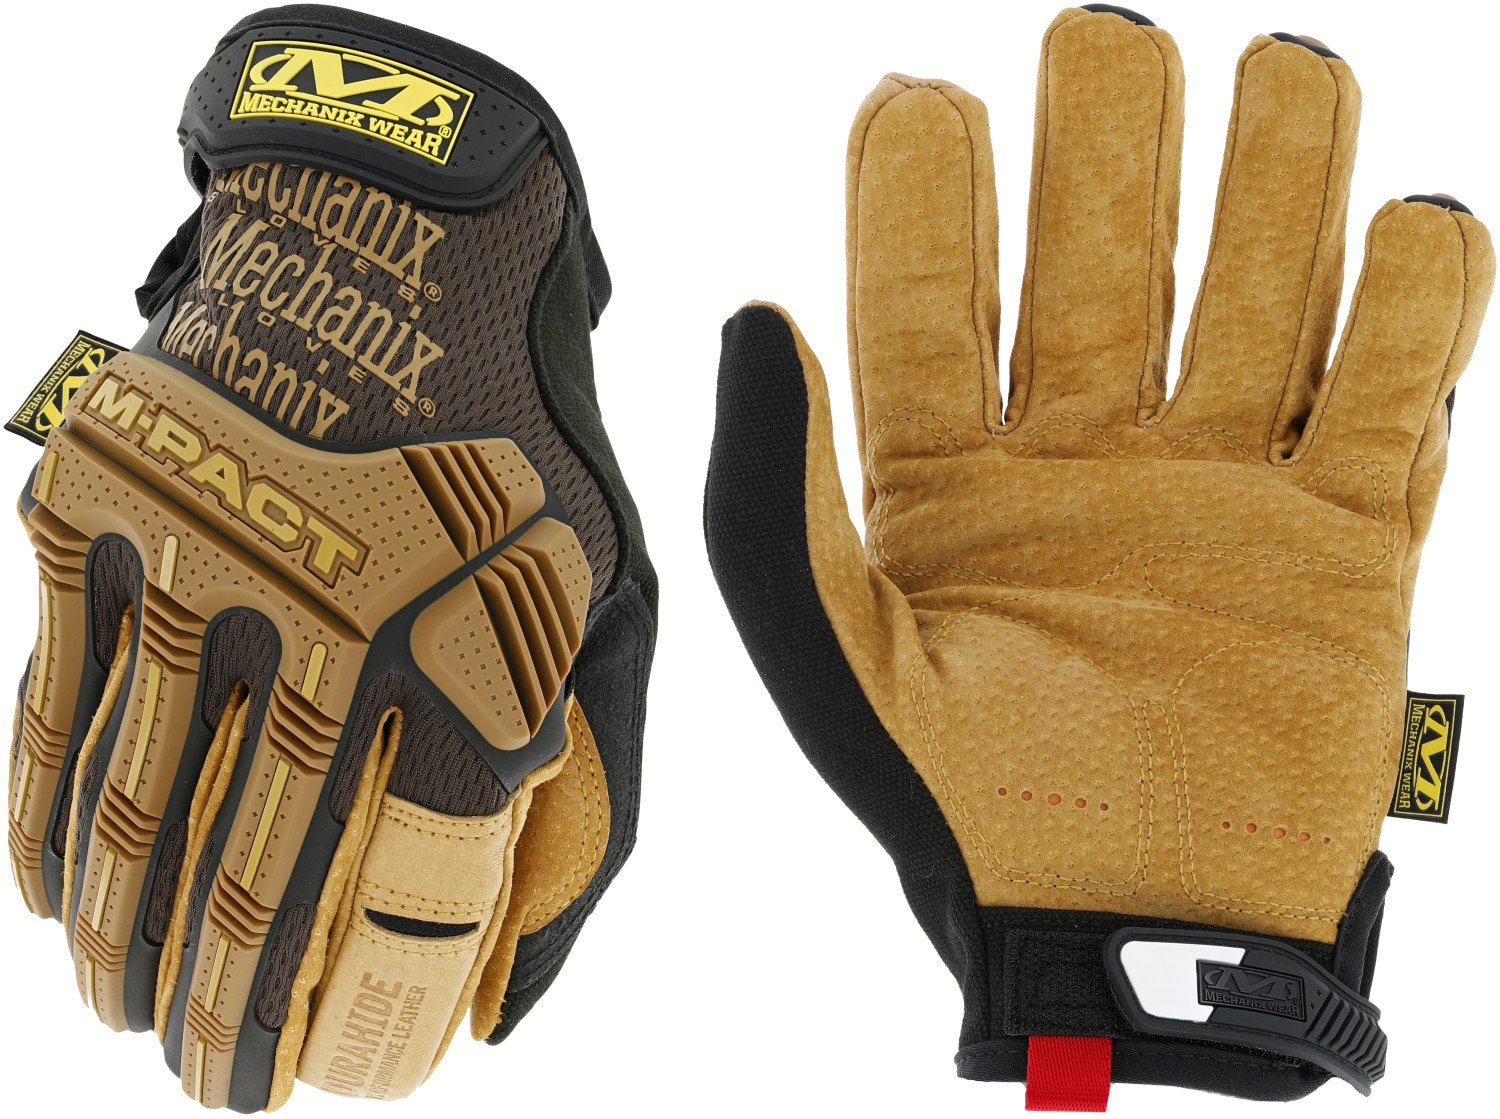 MECHANIX WEAR Medium Brown Leather Gloves, (1-Pair) in the Work